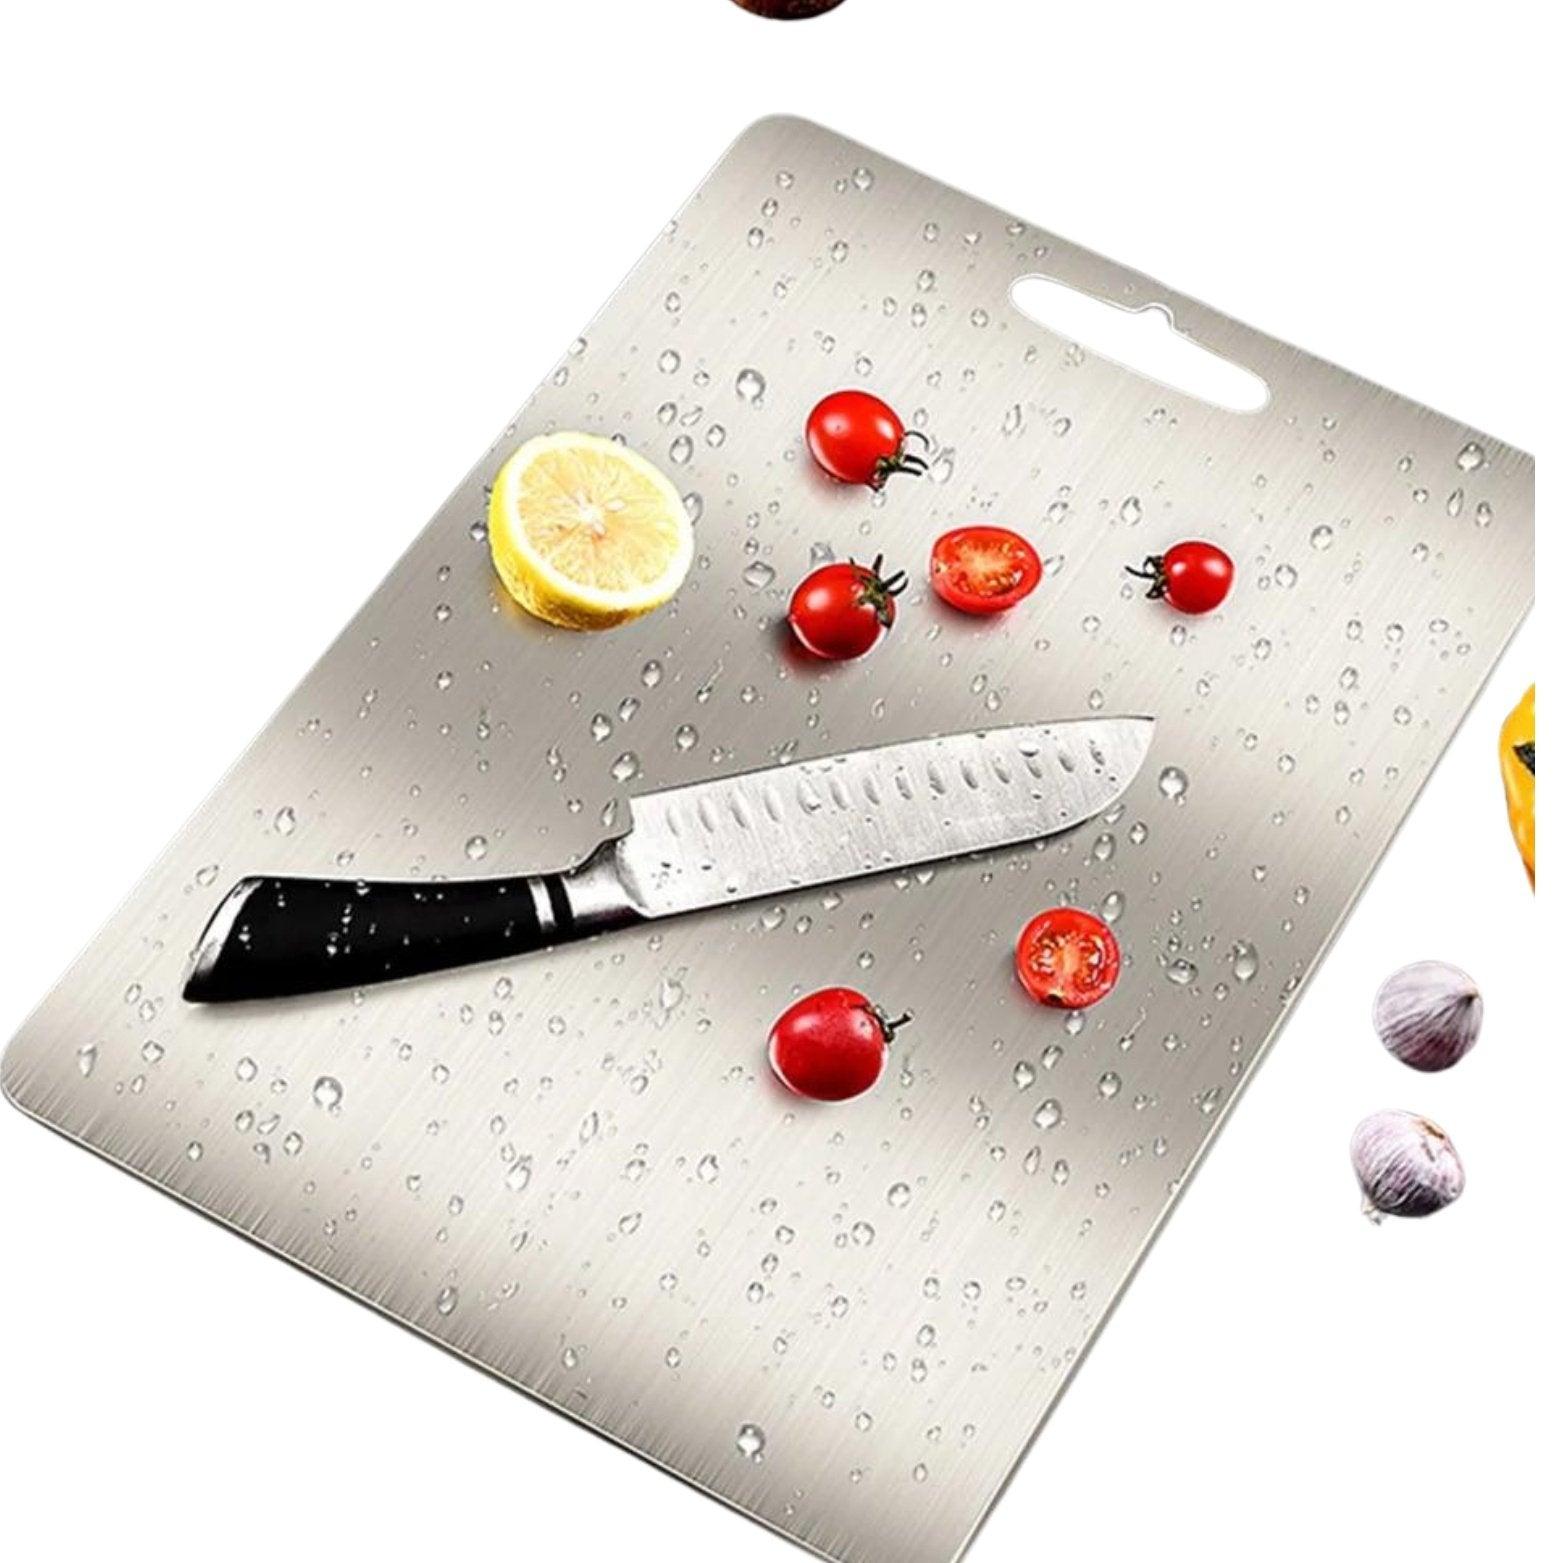 Chef's Edge Dual Delight Chopping Board - Acrylikits™14:10#24x15cm